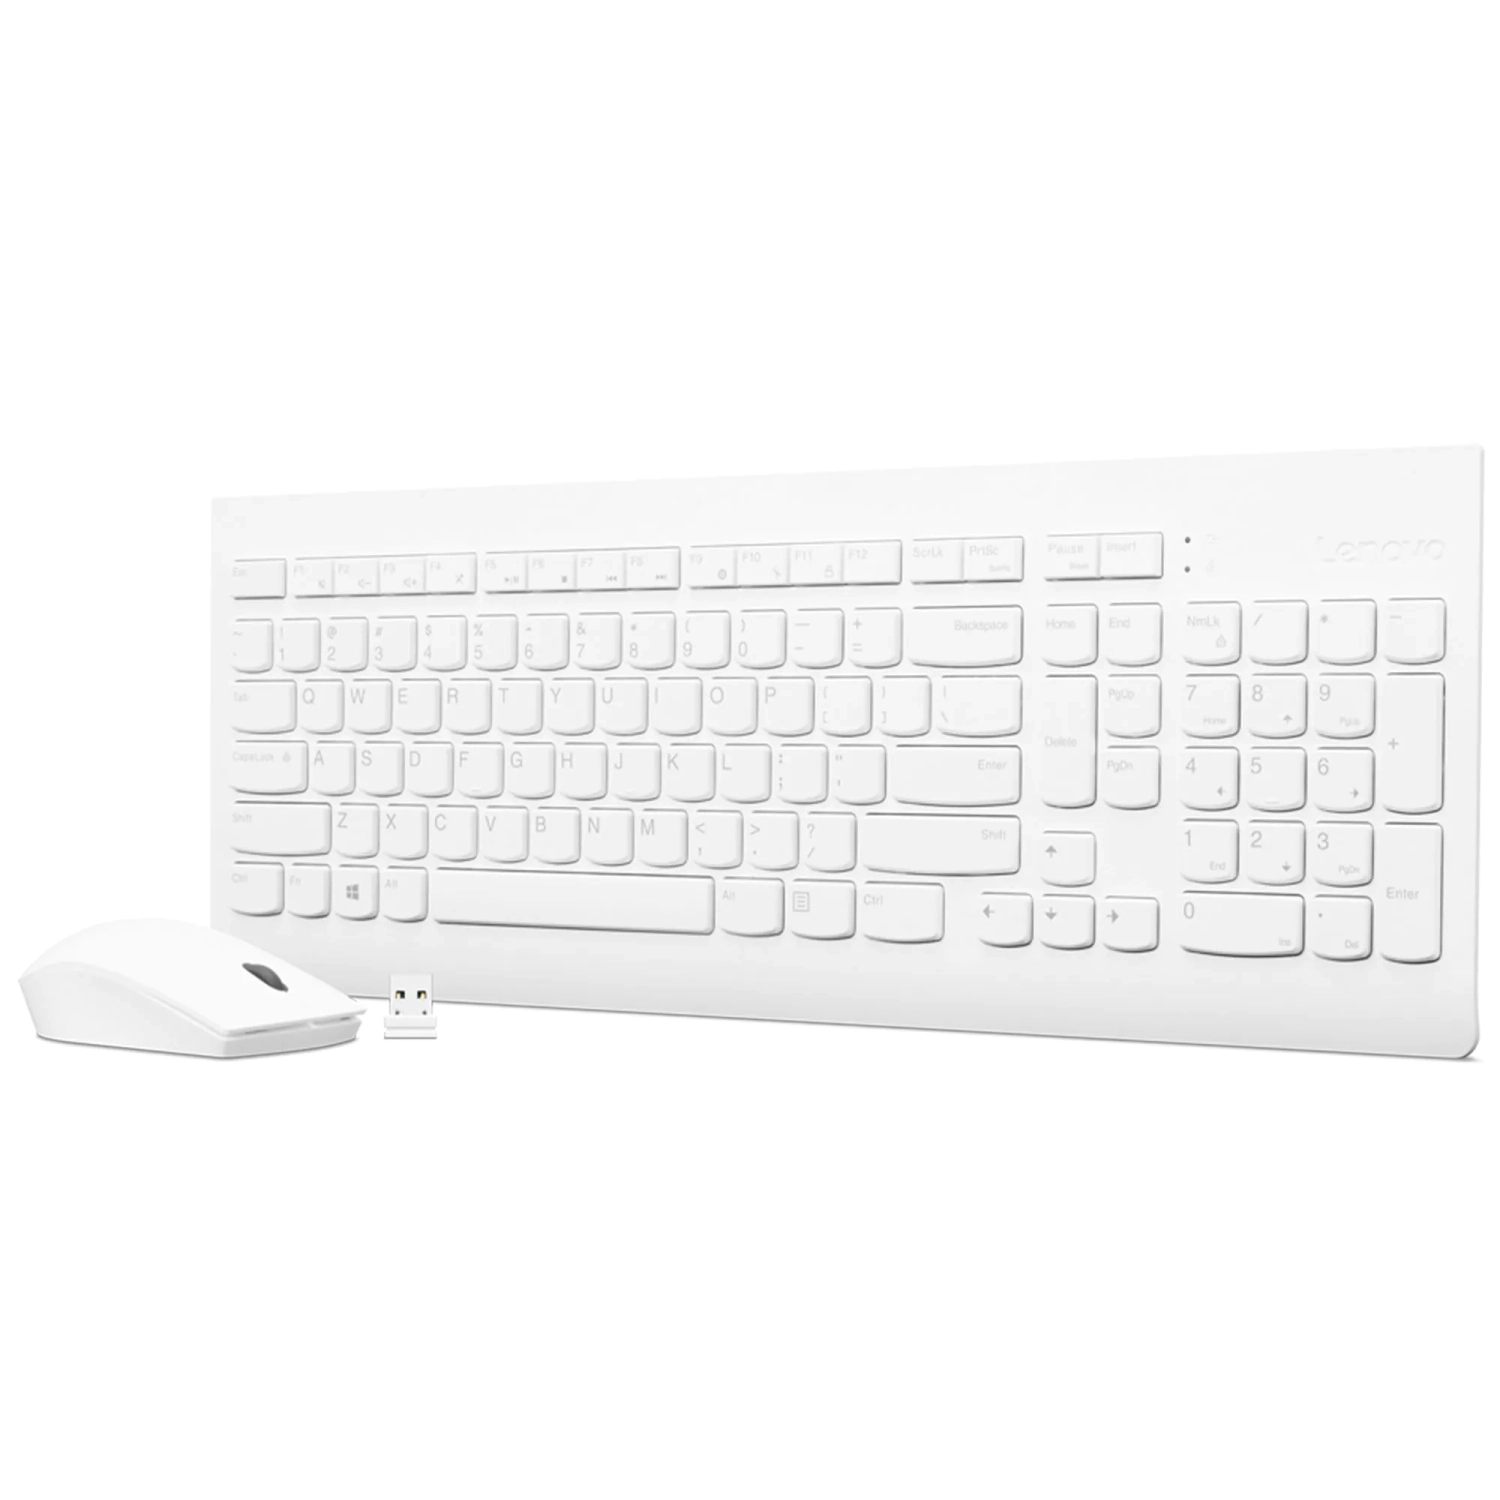 Lenovo 510 Wireless Combo Keyboard & Mouse (White) - US English